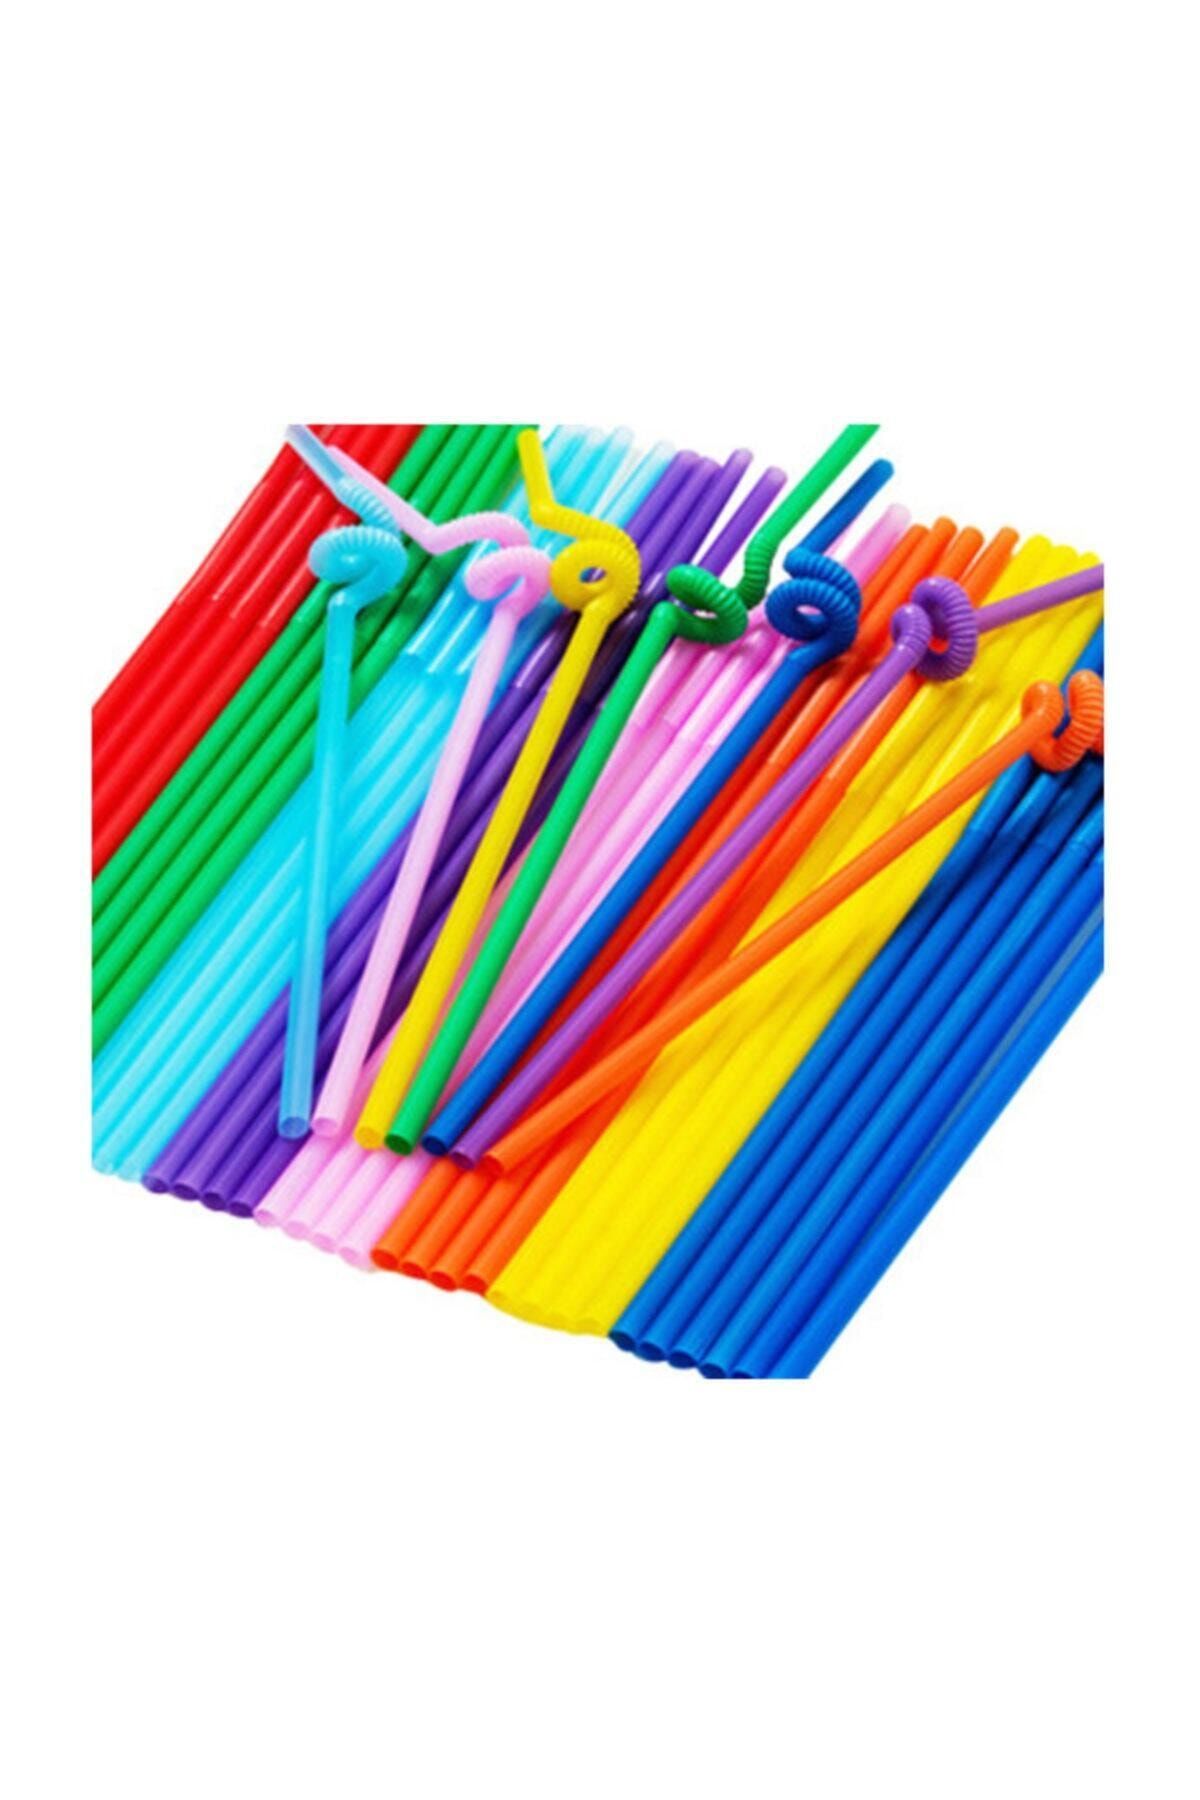 TT Tahtakale Toptancıları Pipet Artistik Straws 6 mm Plastik Karışık Renkli (50 Adet)